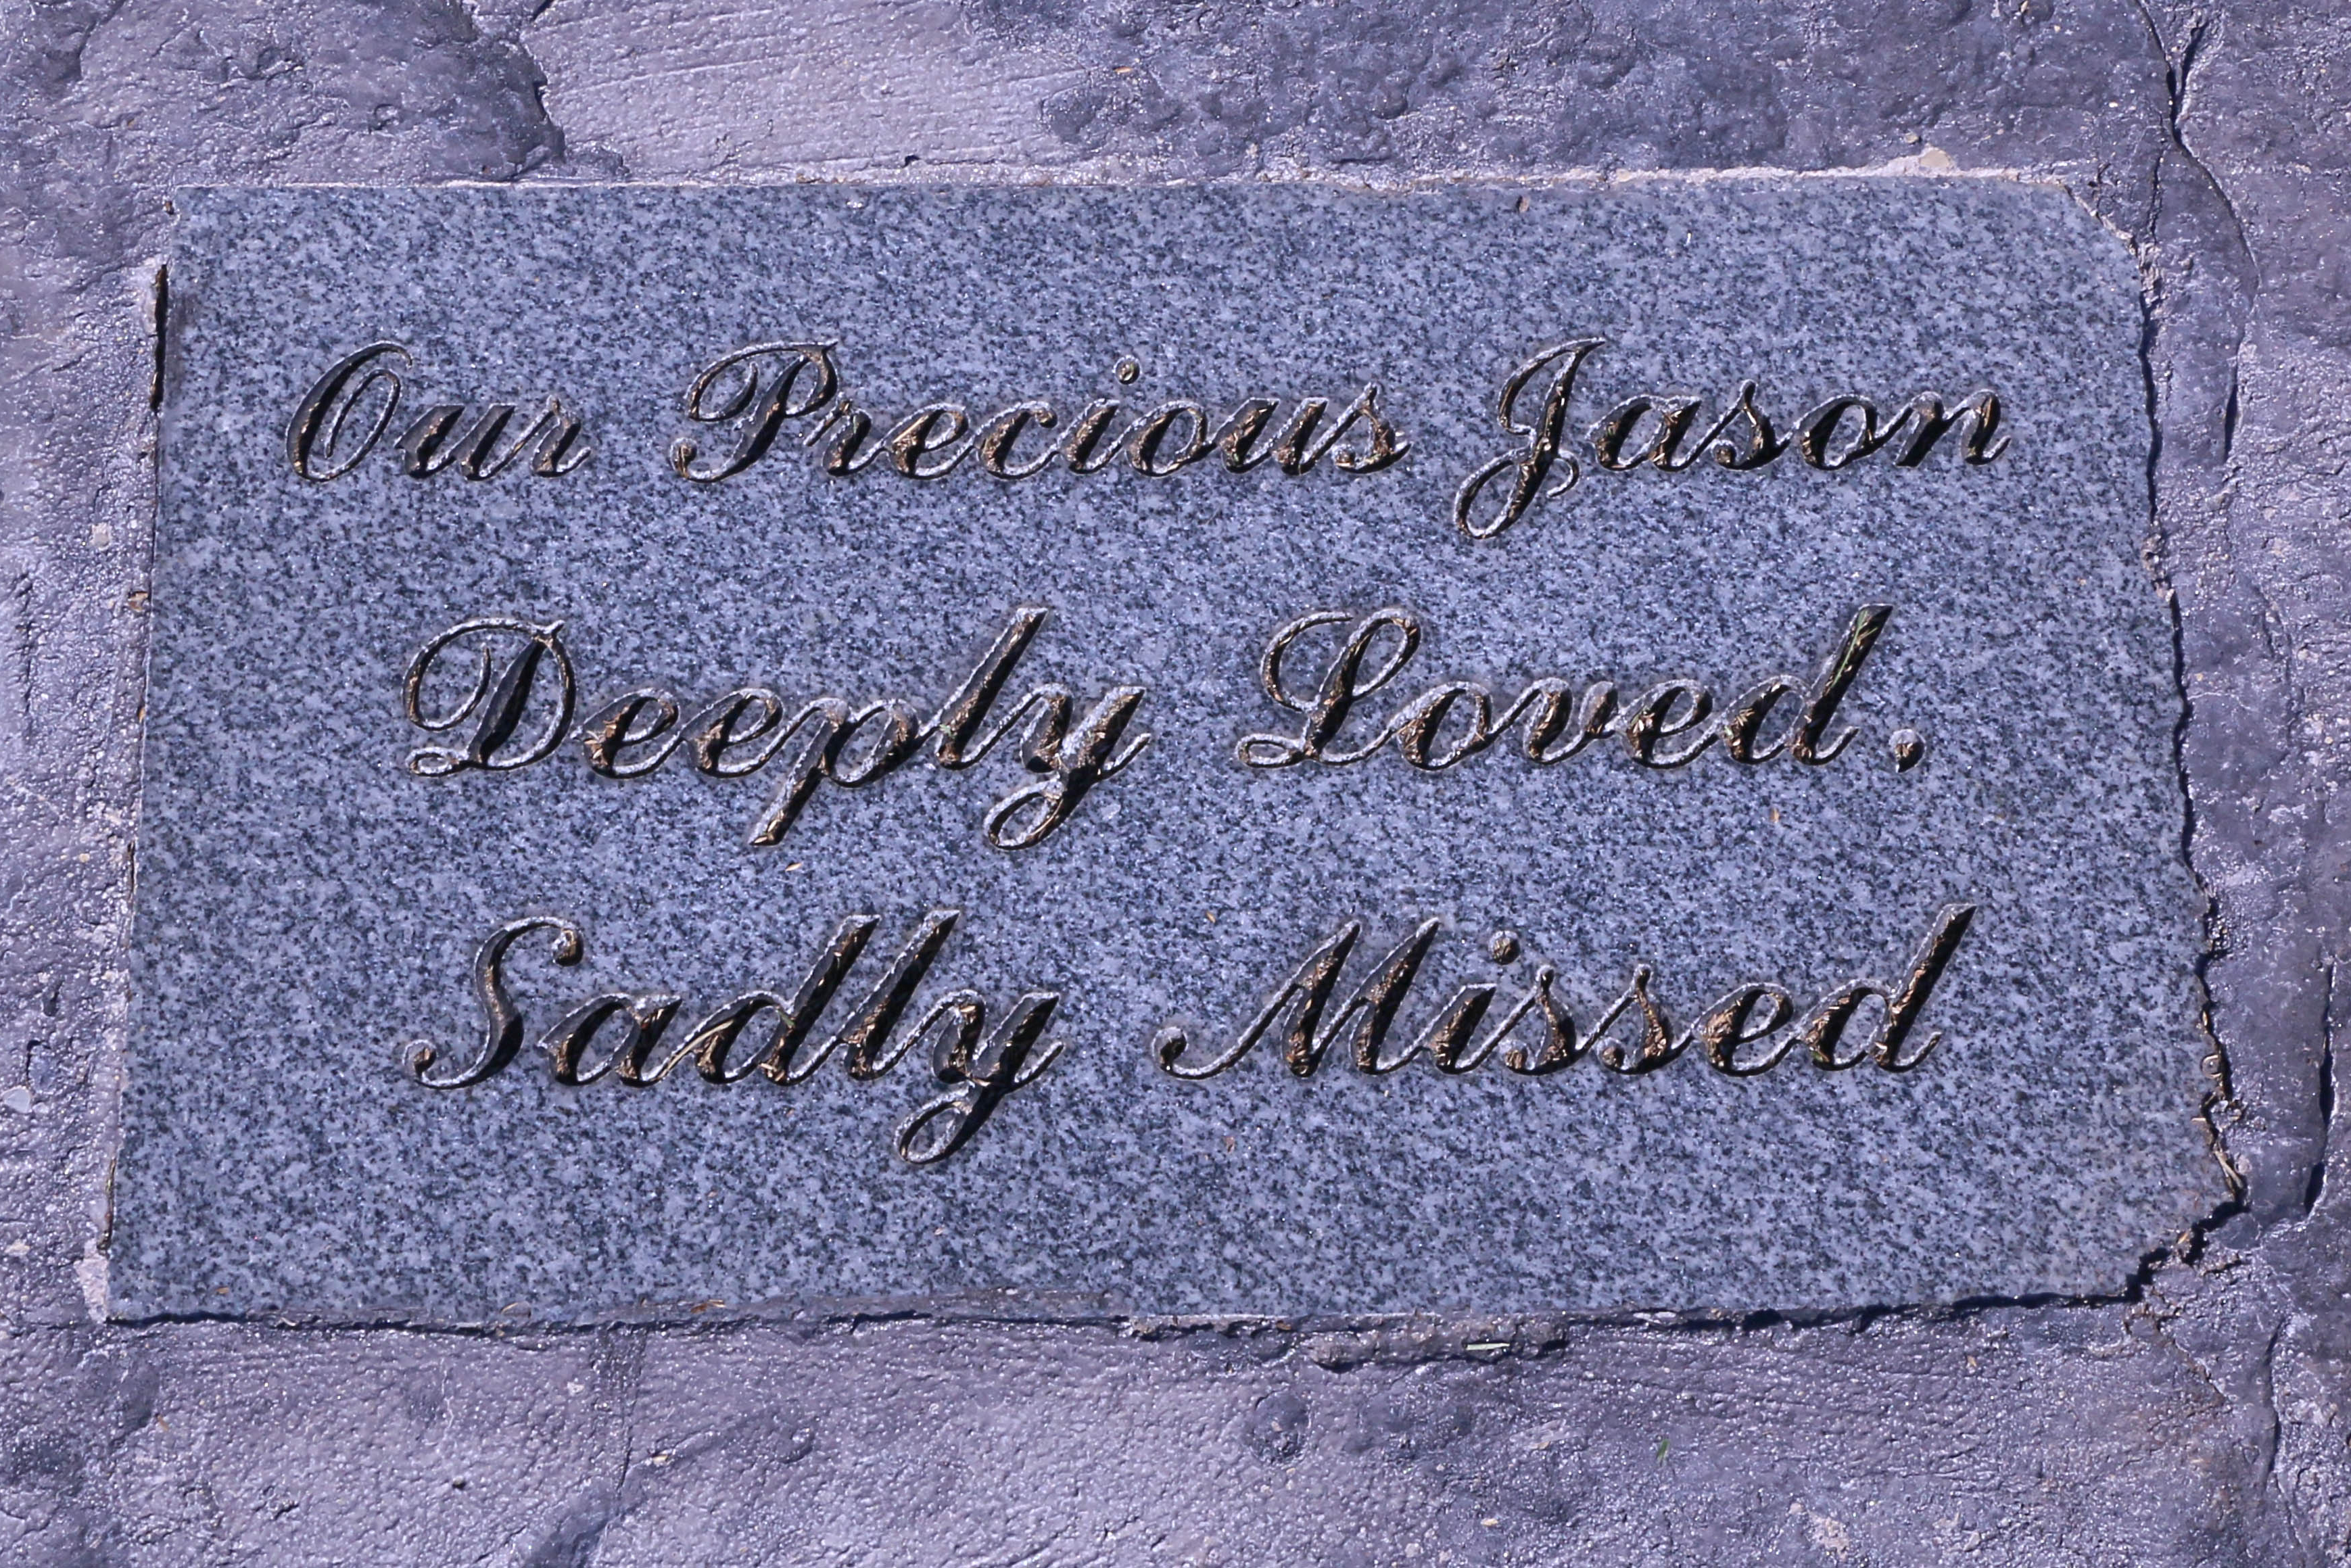 Headstone close-up - Inscription